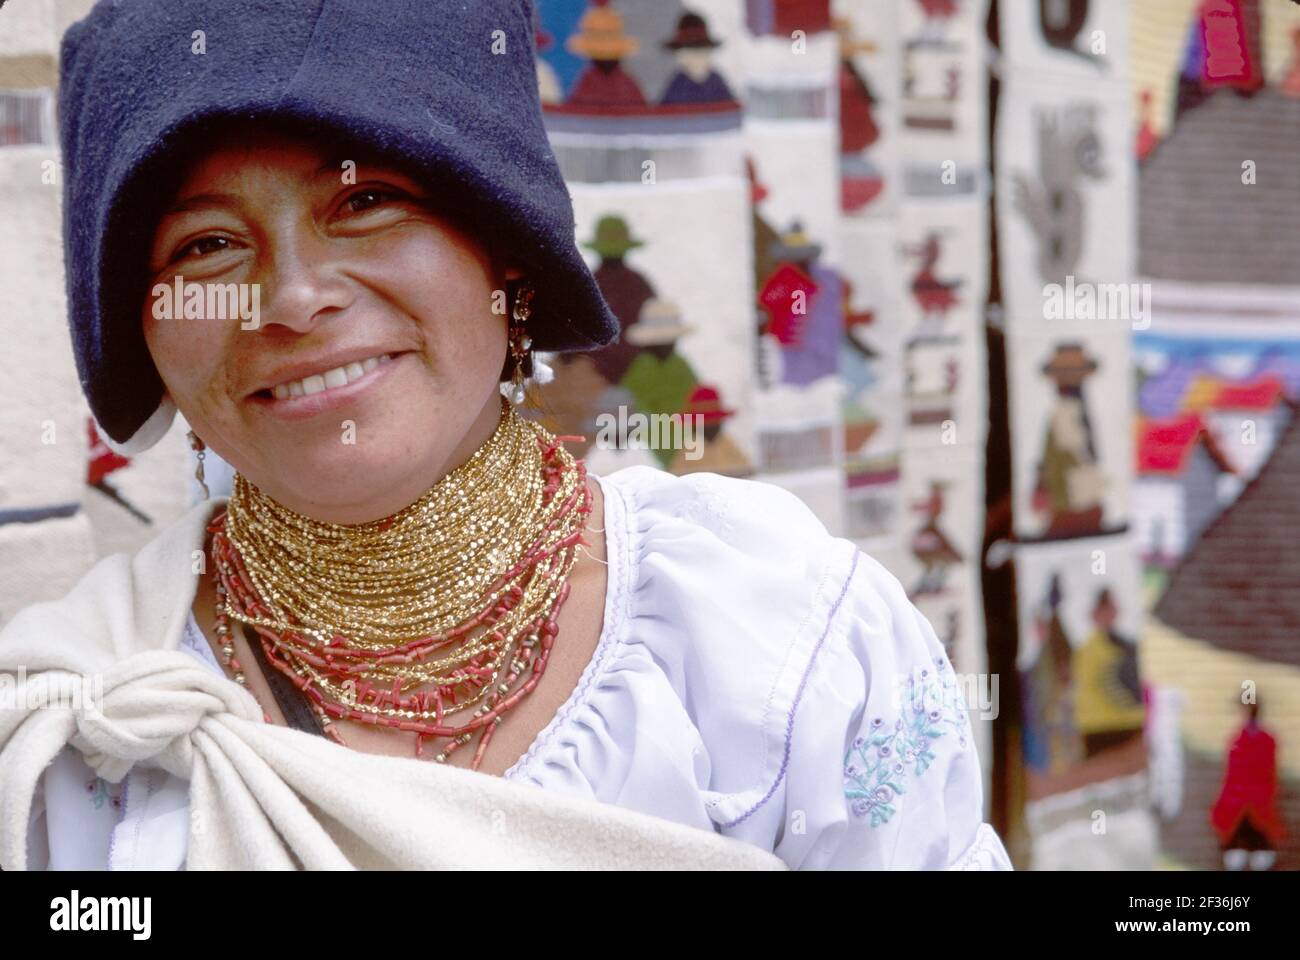 Ecuador Ecuadorian South America American Otavalo Market marketplace,Indigenous woman female vendor vendors Stock Photo